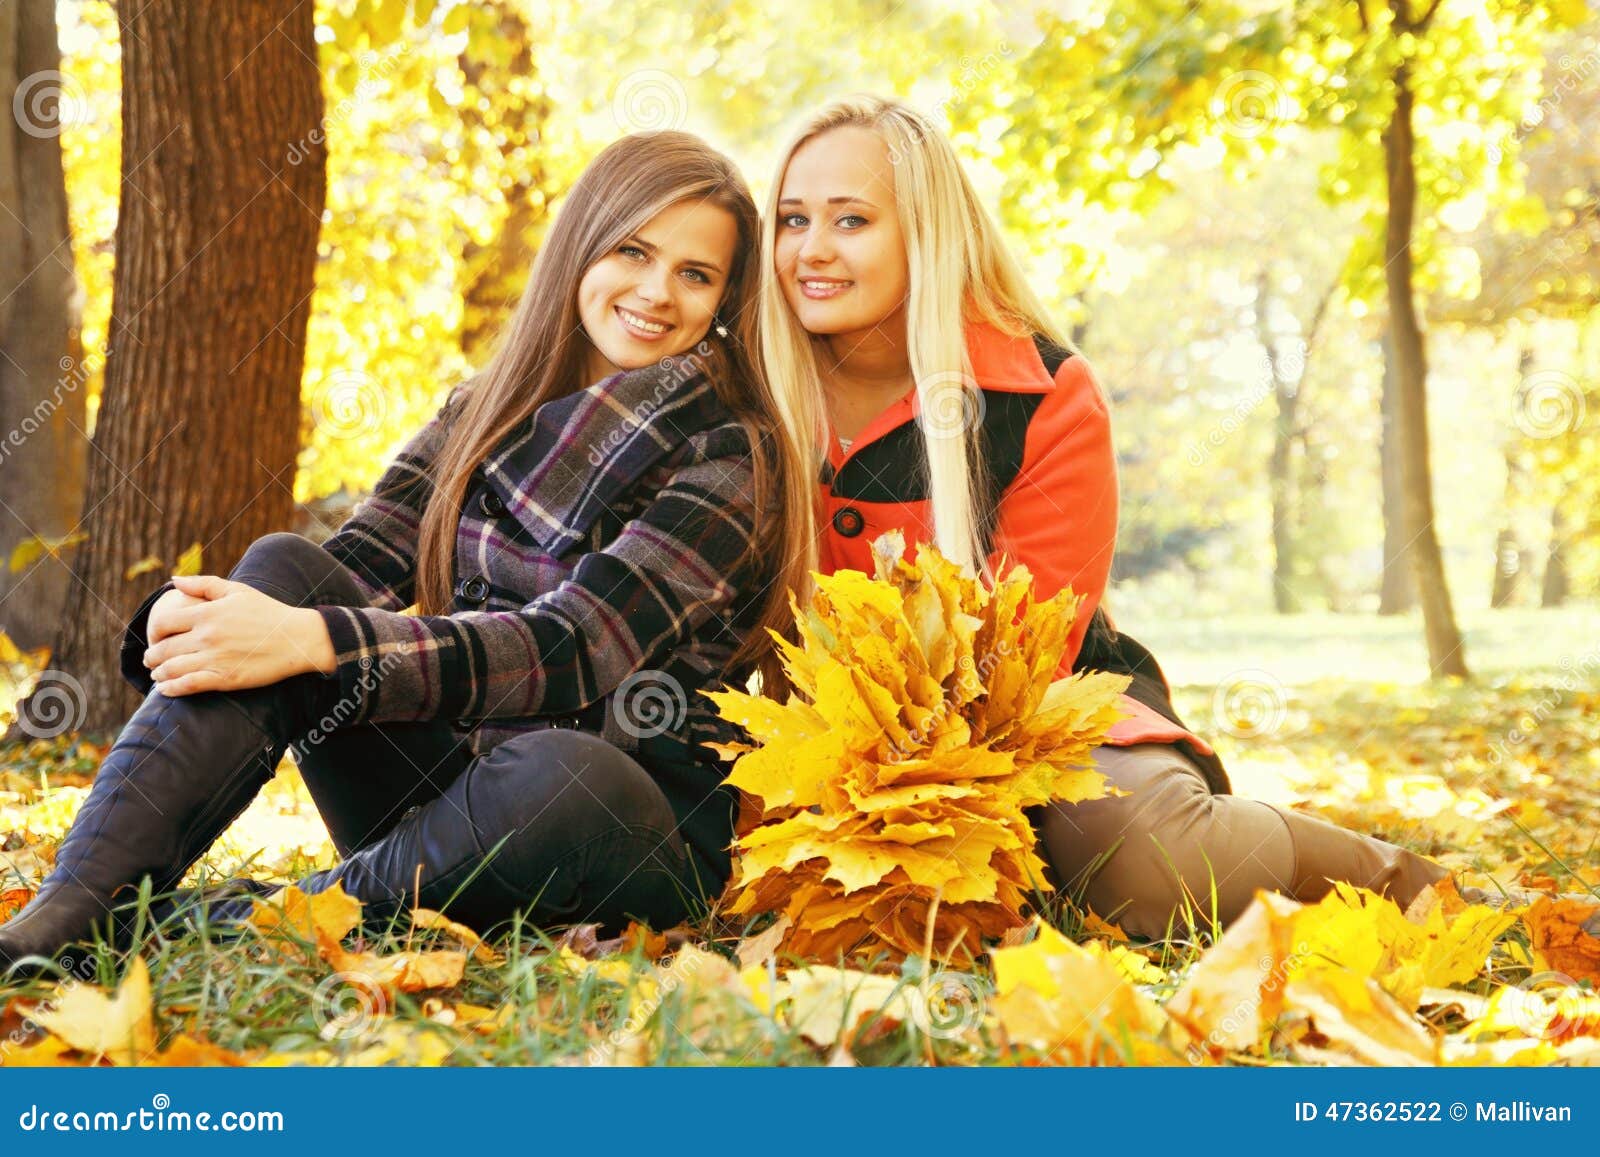 Two smiling girls, tinted stock photo. Image of orange - 47362522